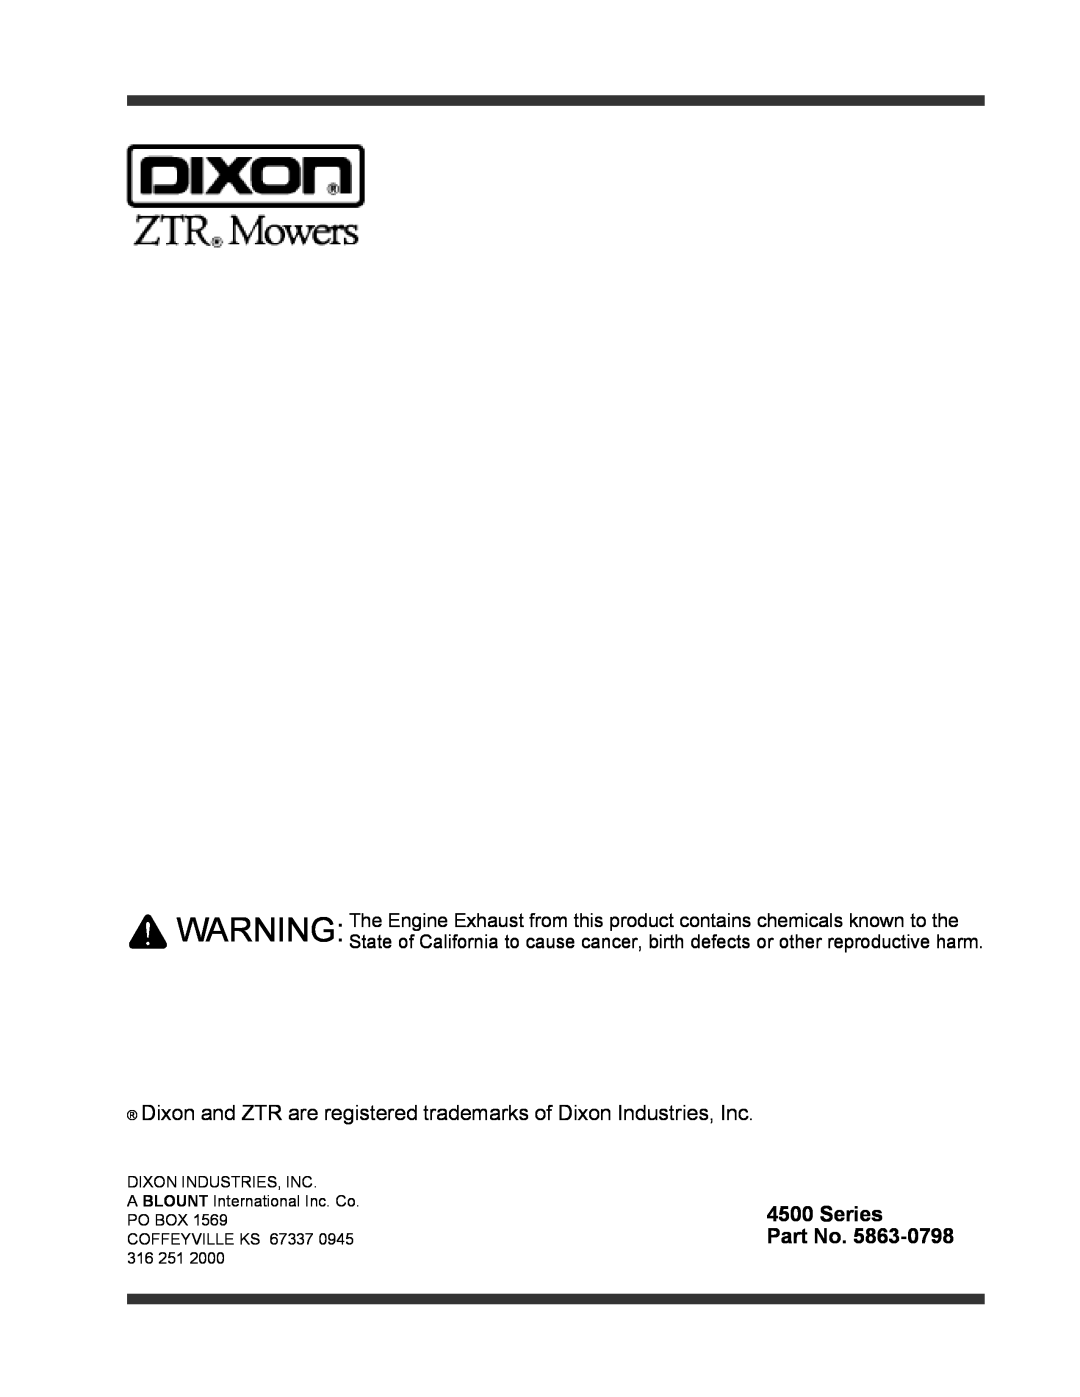 Dixon ZTR 4516K, ZTR 4515B manual Dixon and ZTR are registered trademarks of Dixon Industries, Inc, Series 